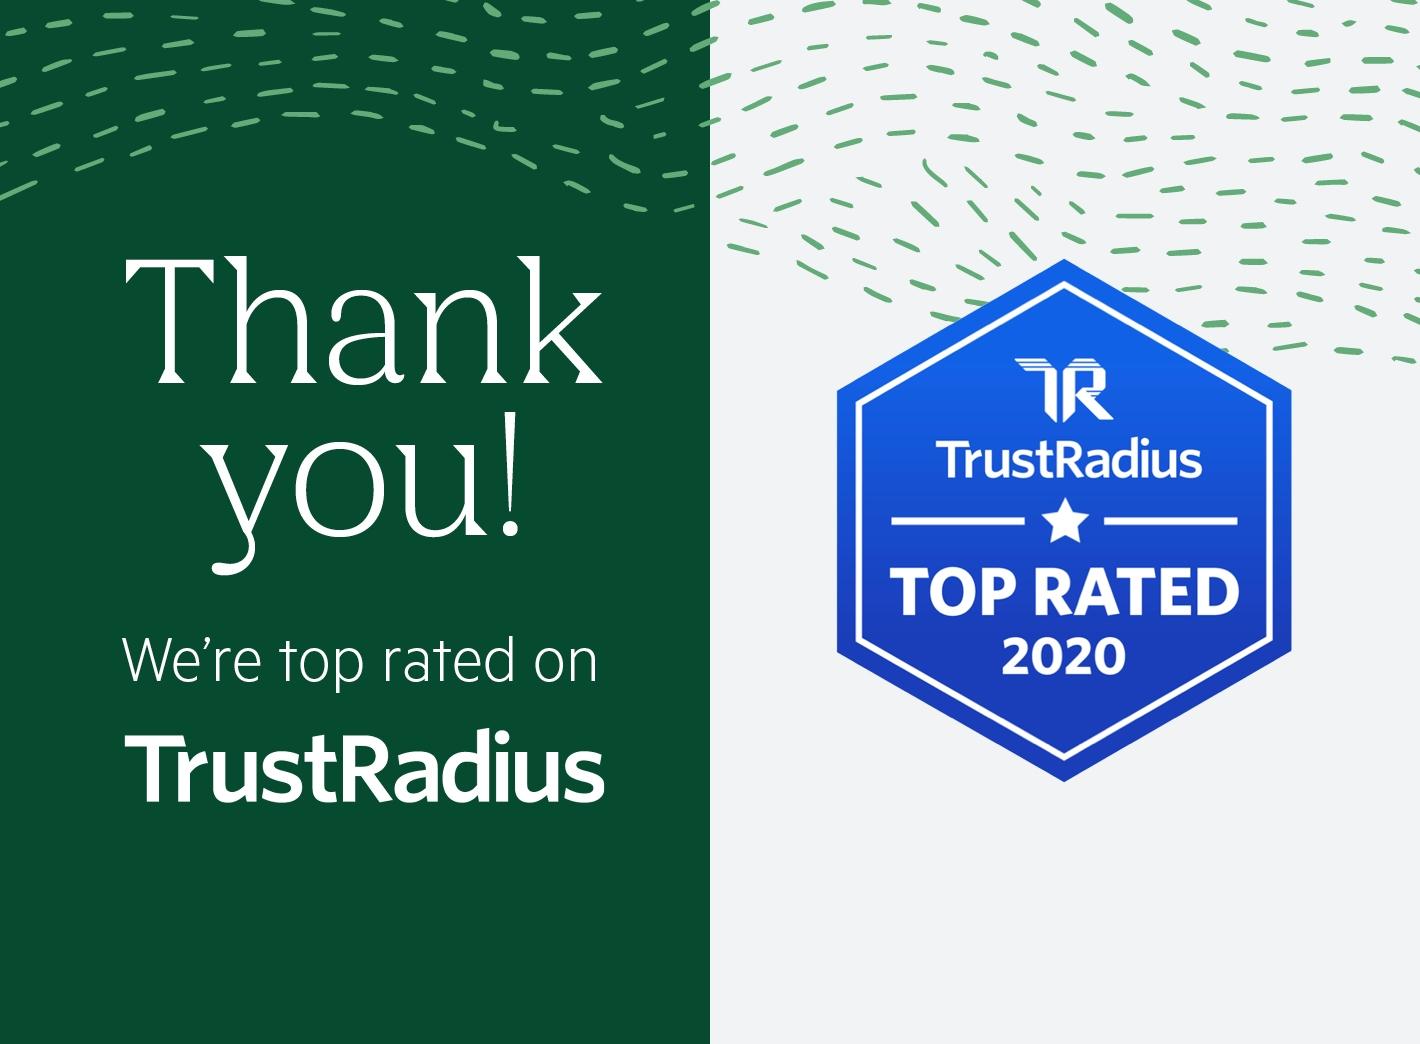 "We're top rated in TrustRadius"